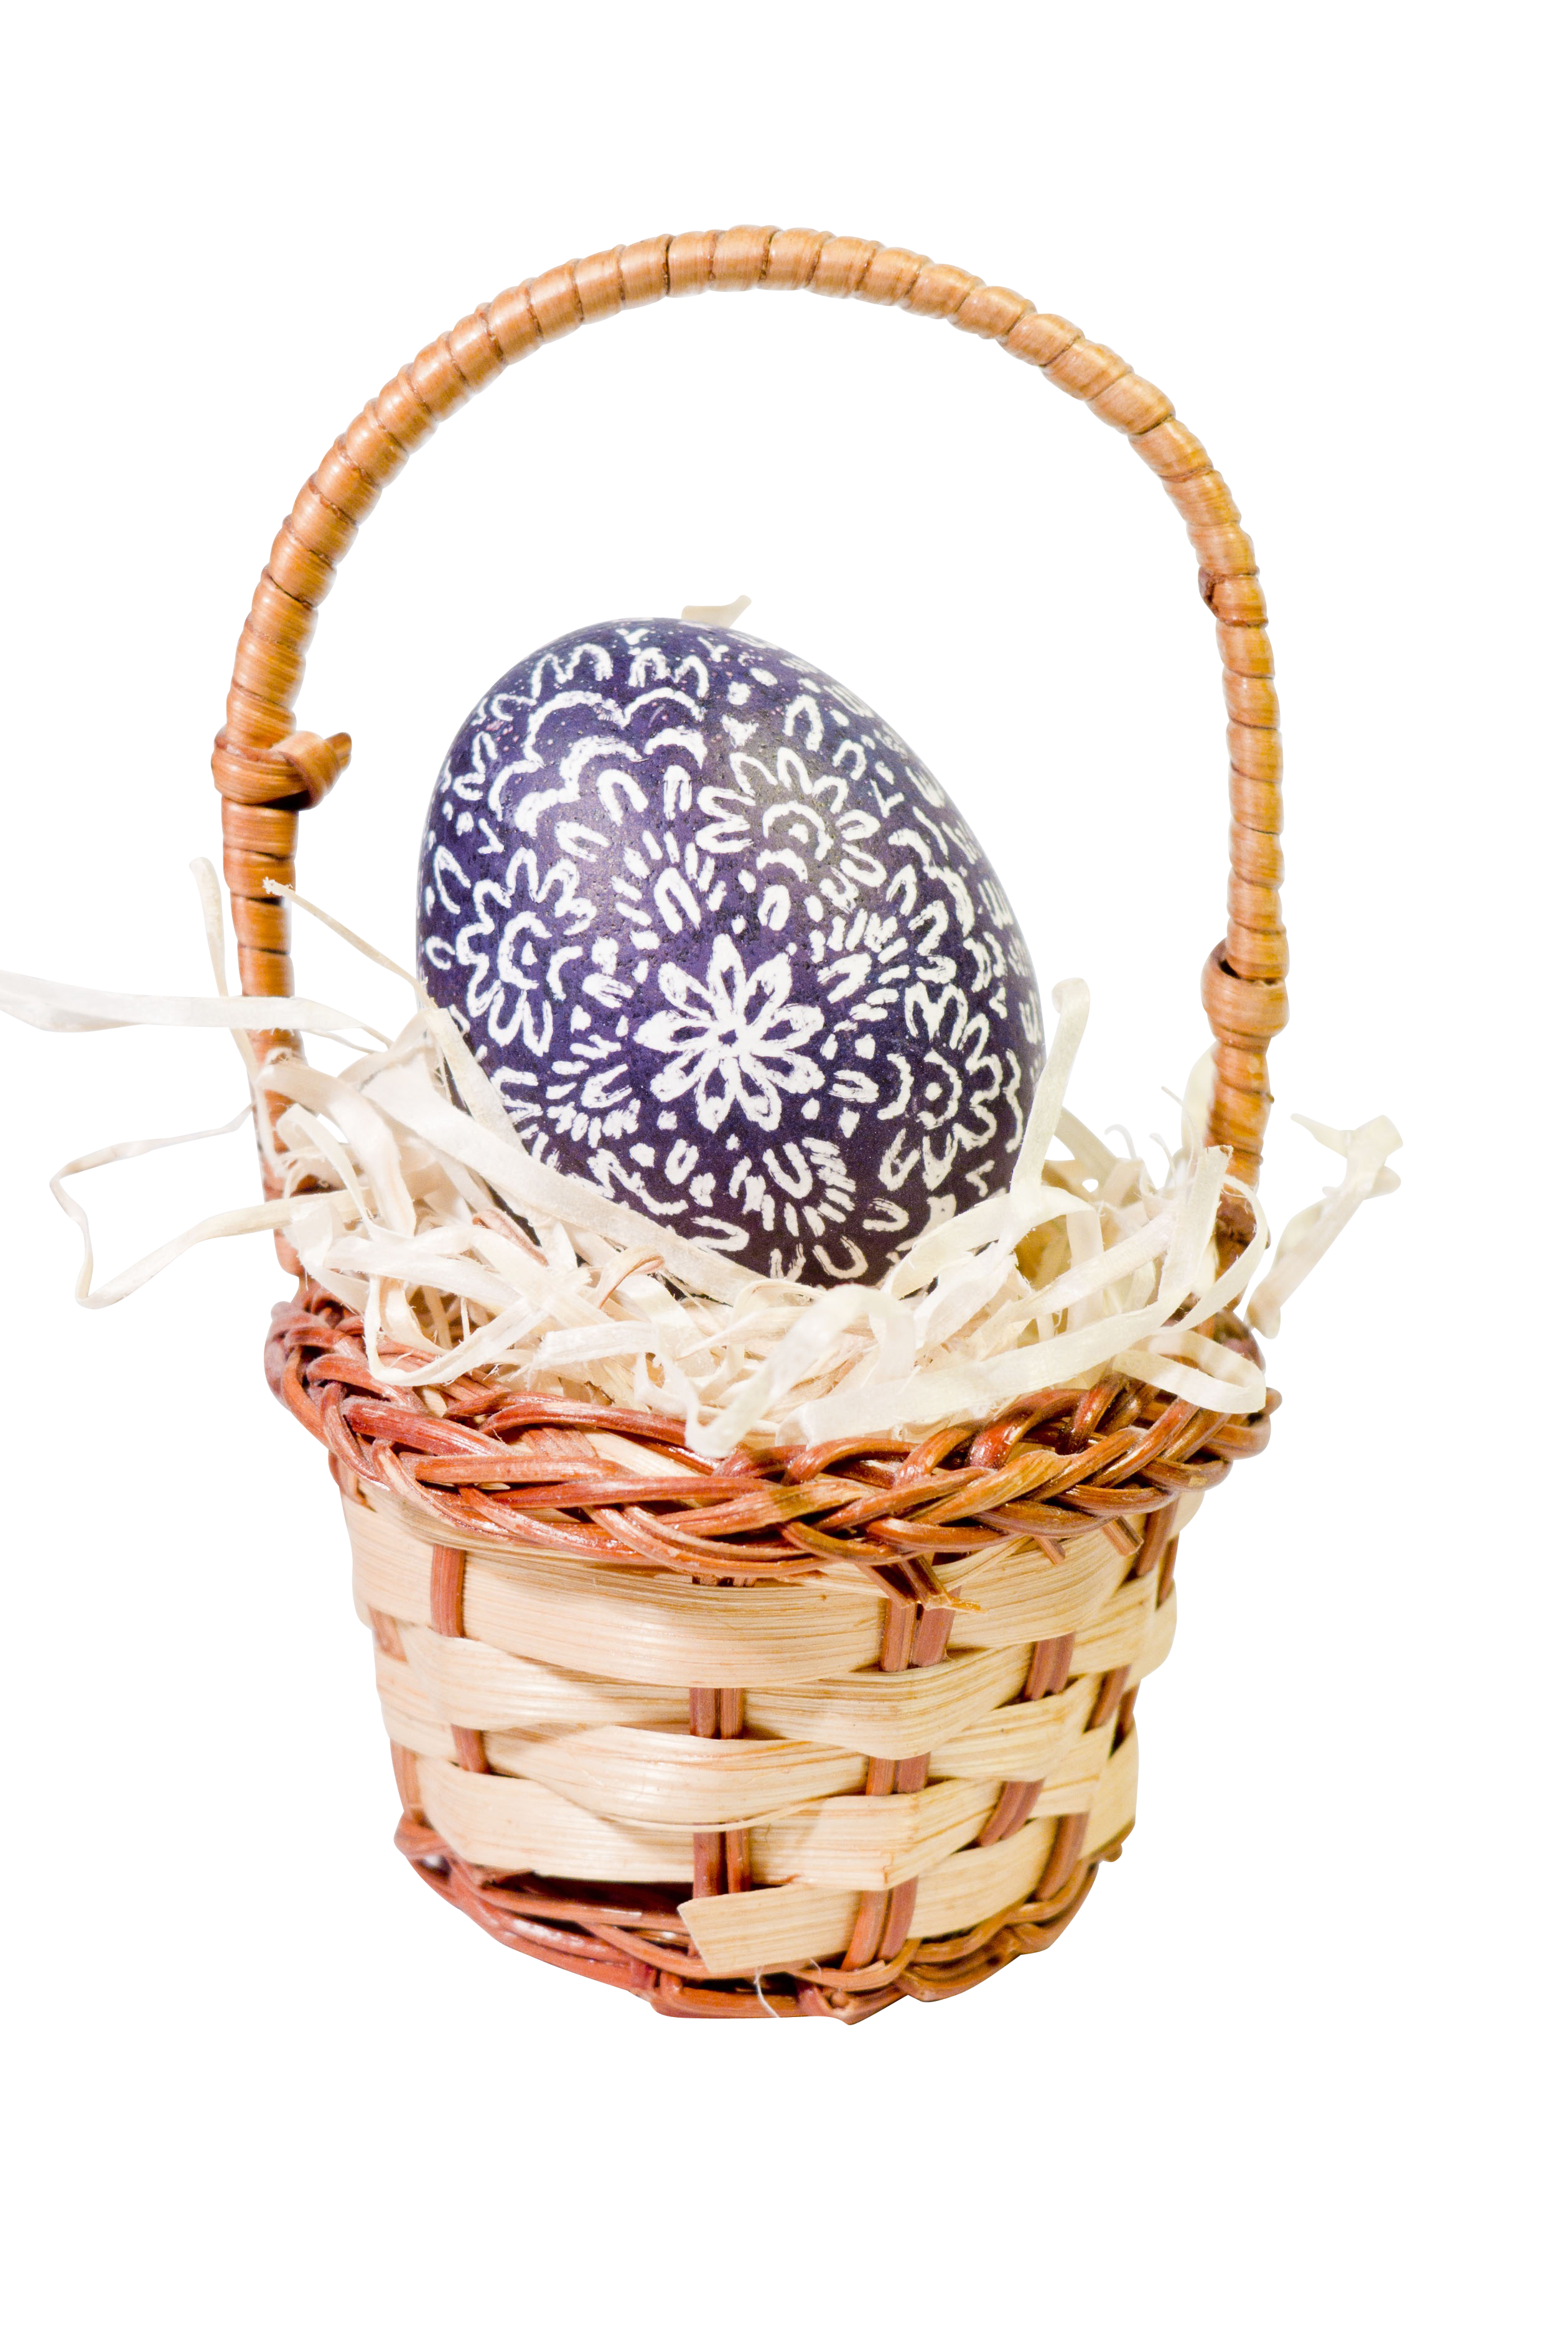 Decorative Easter Eggin Wicker Basket